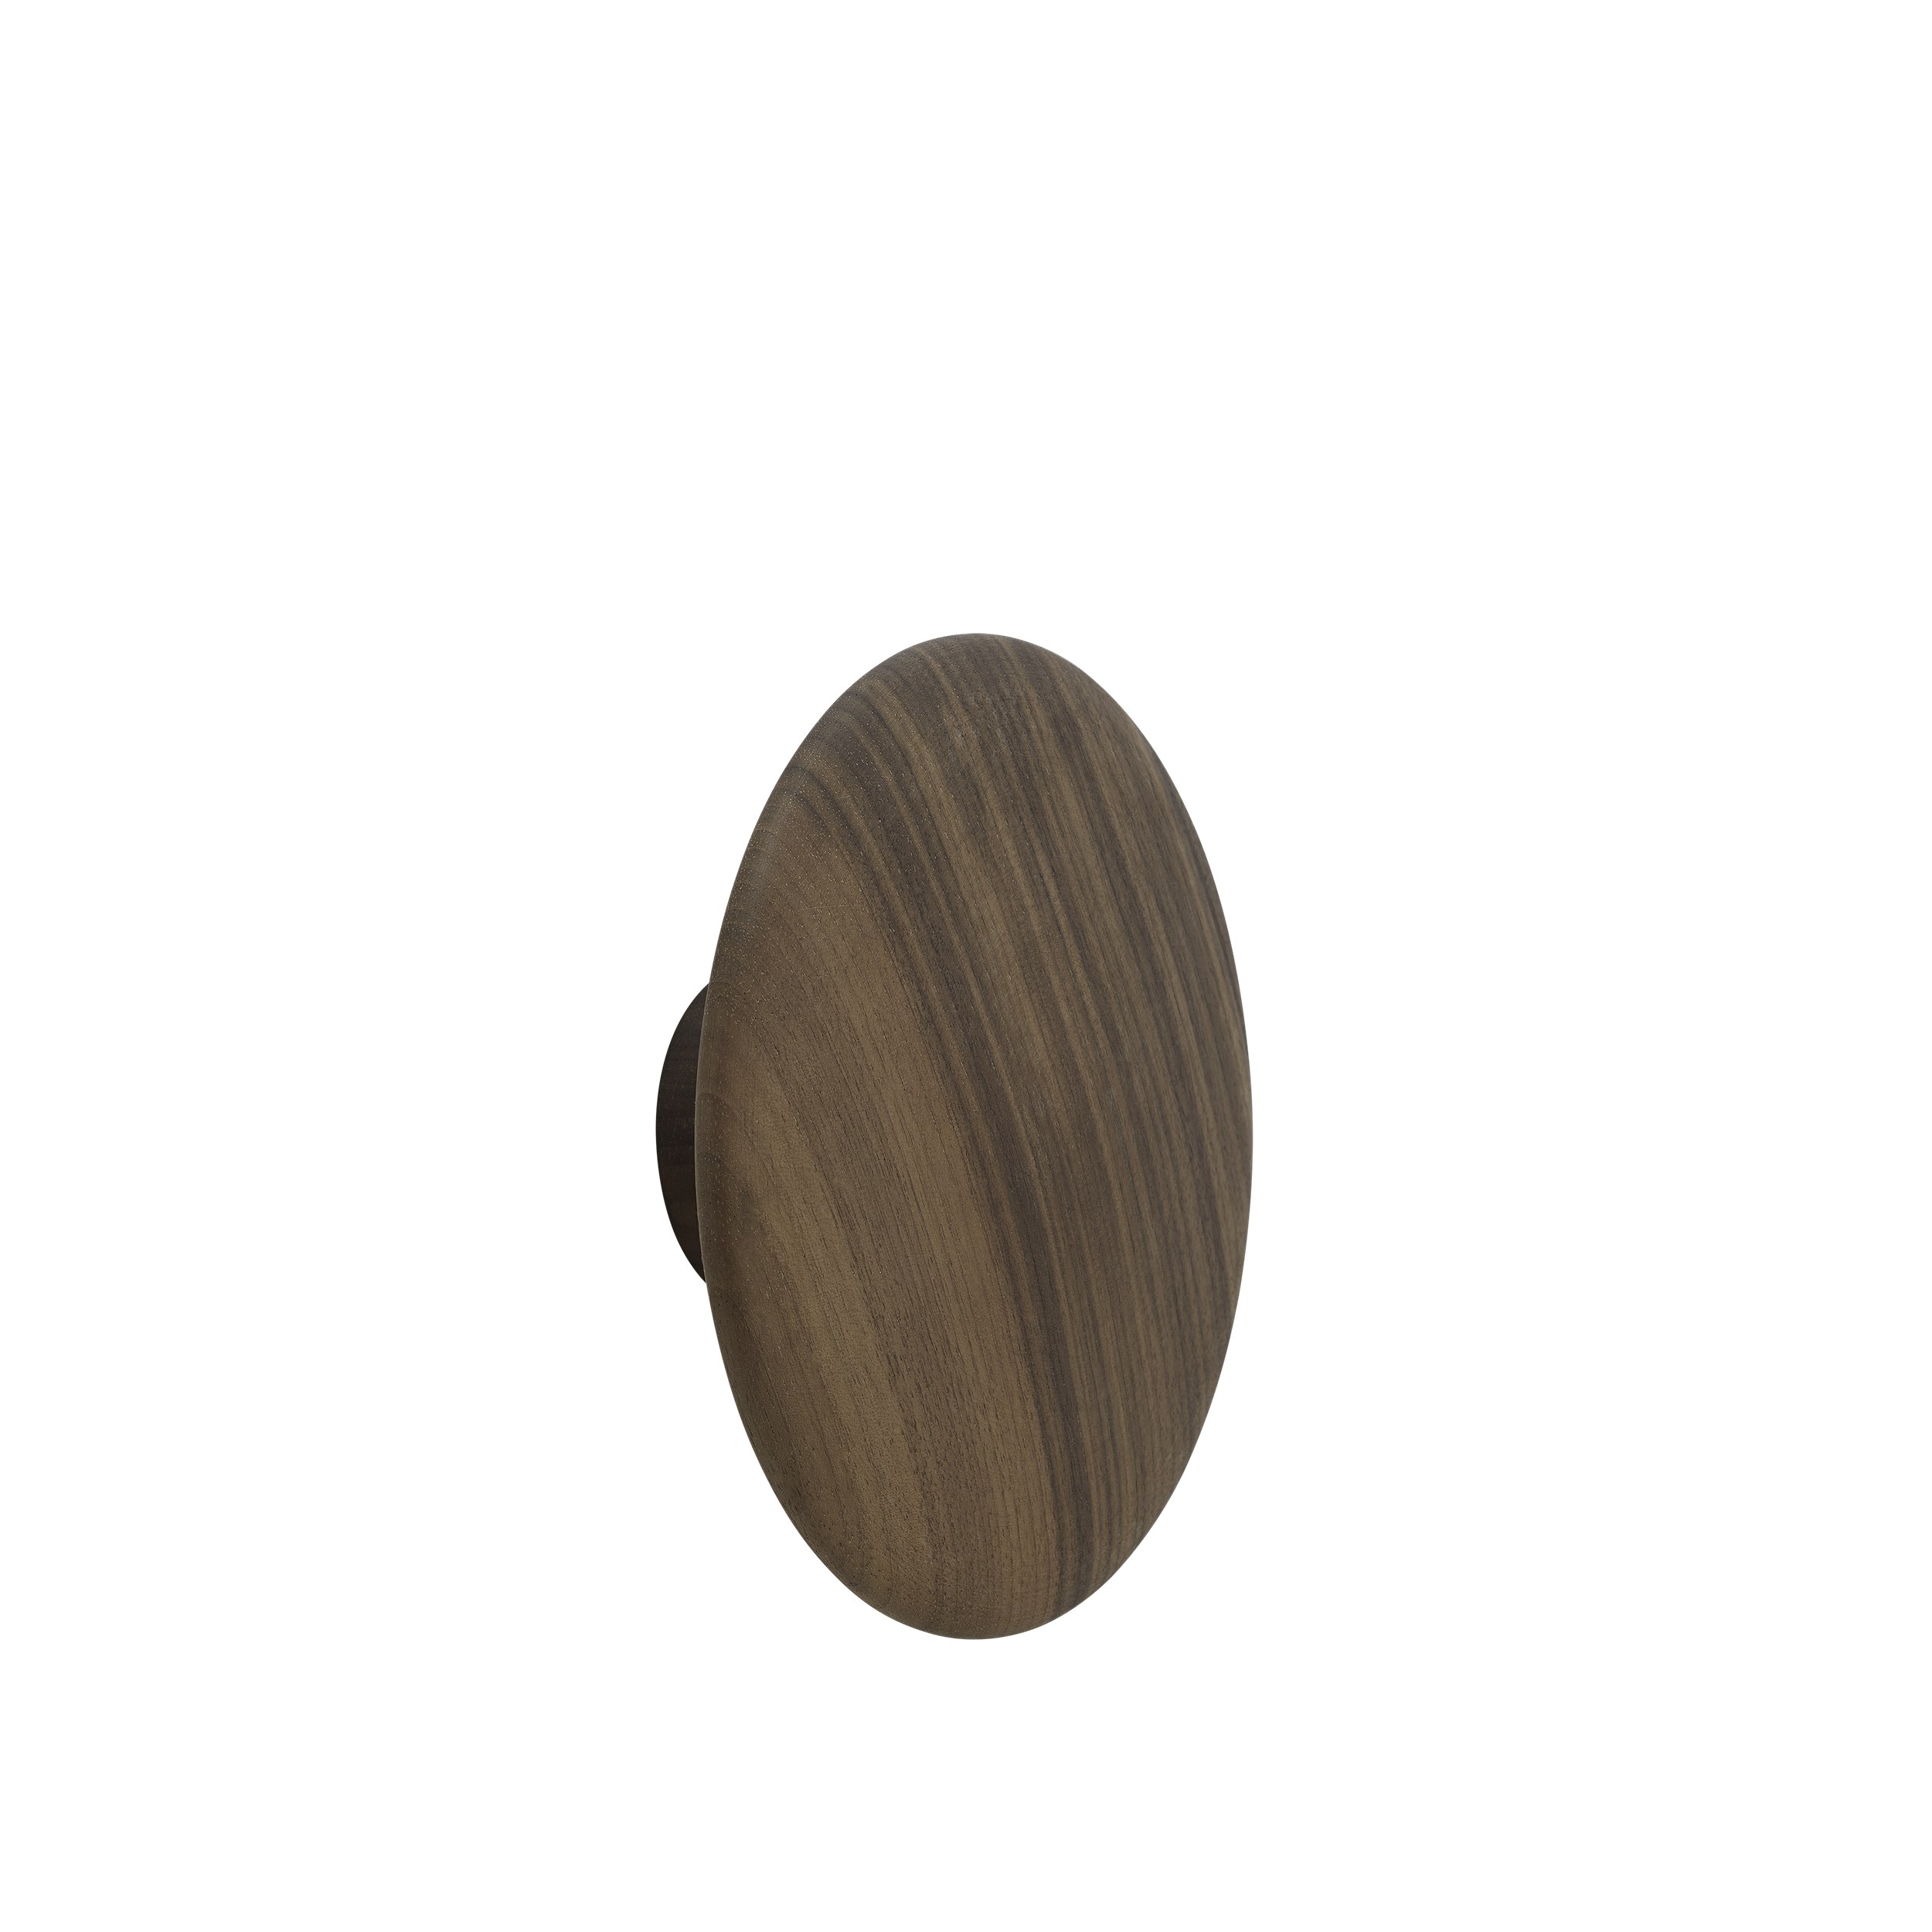 Dot wood large Ø 17 cm walnut